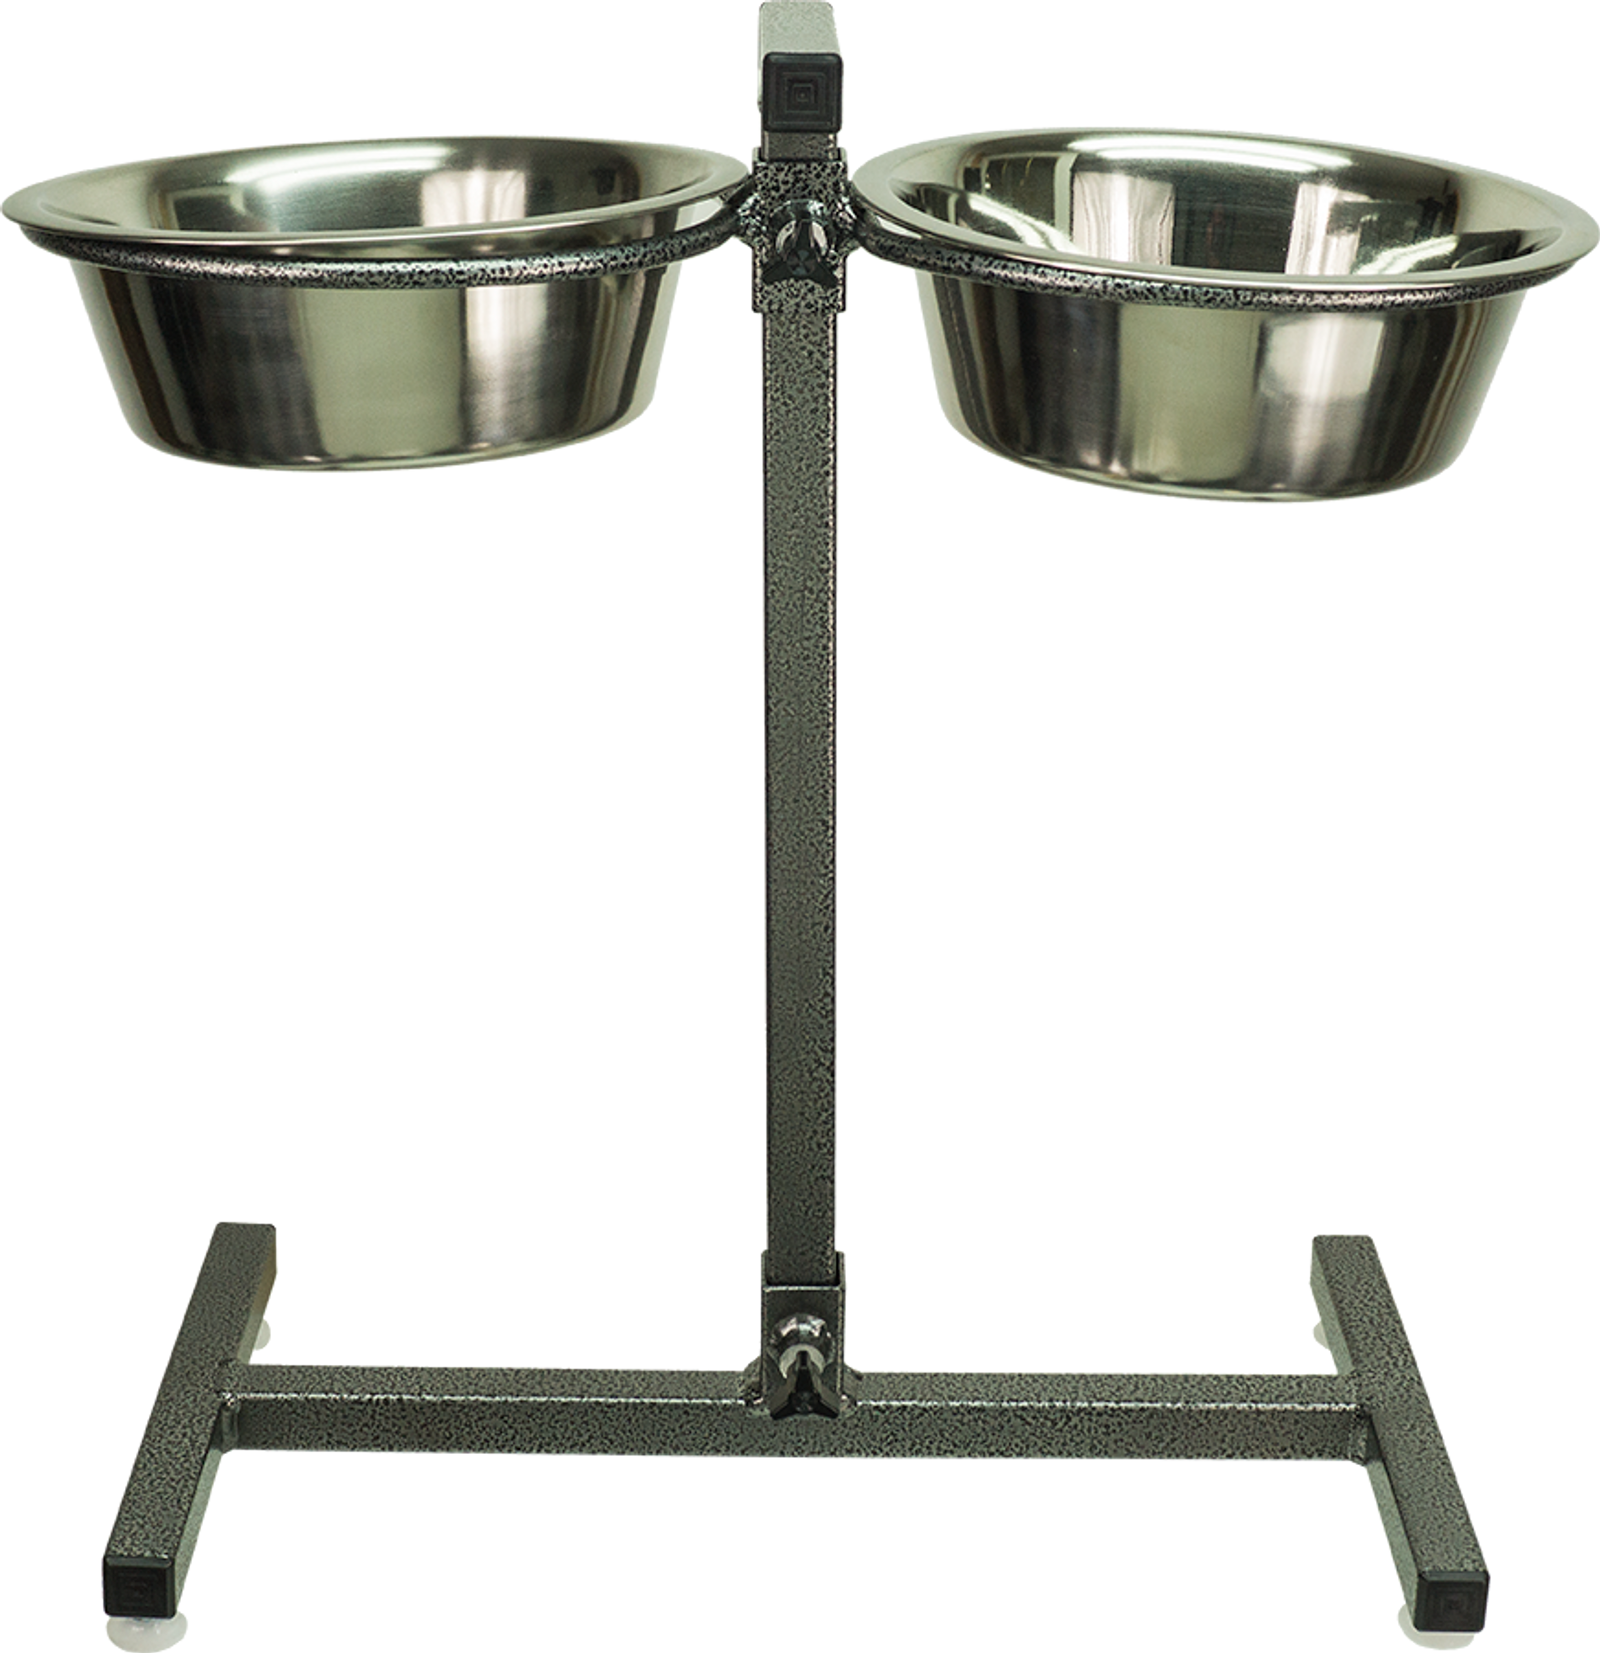 Dog Bowls Elevated Adjustable 3 Height Dog Bowl Stand Pet Food Feeder  Storage